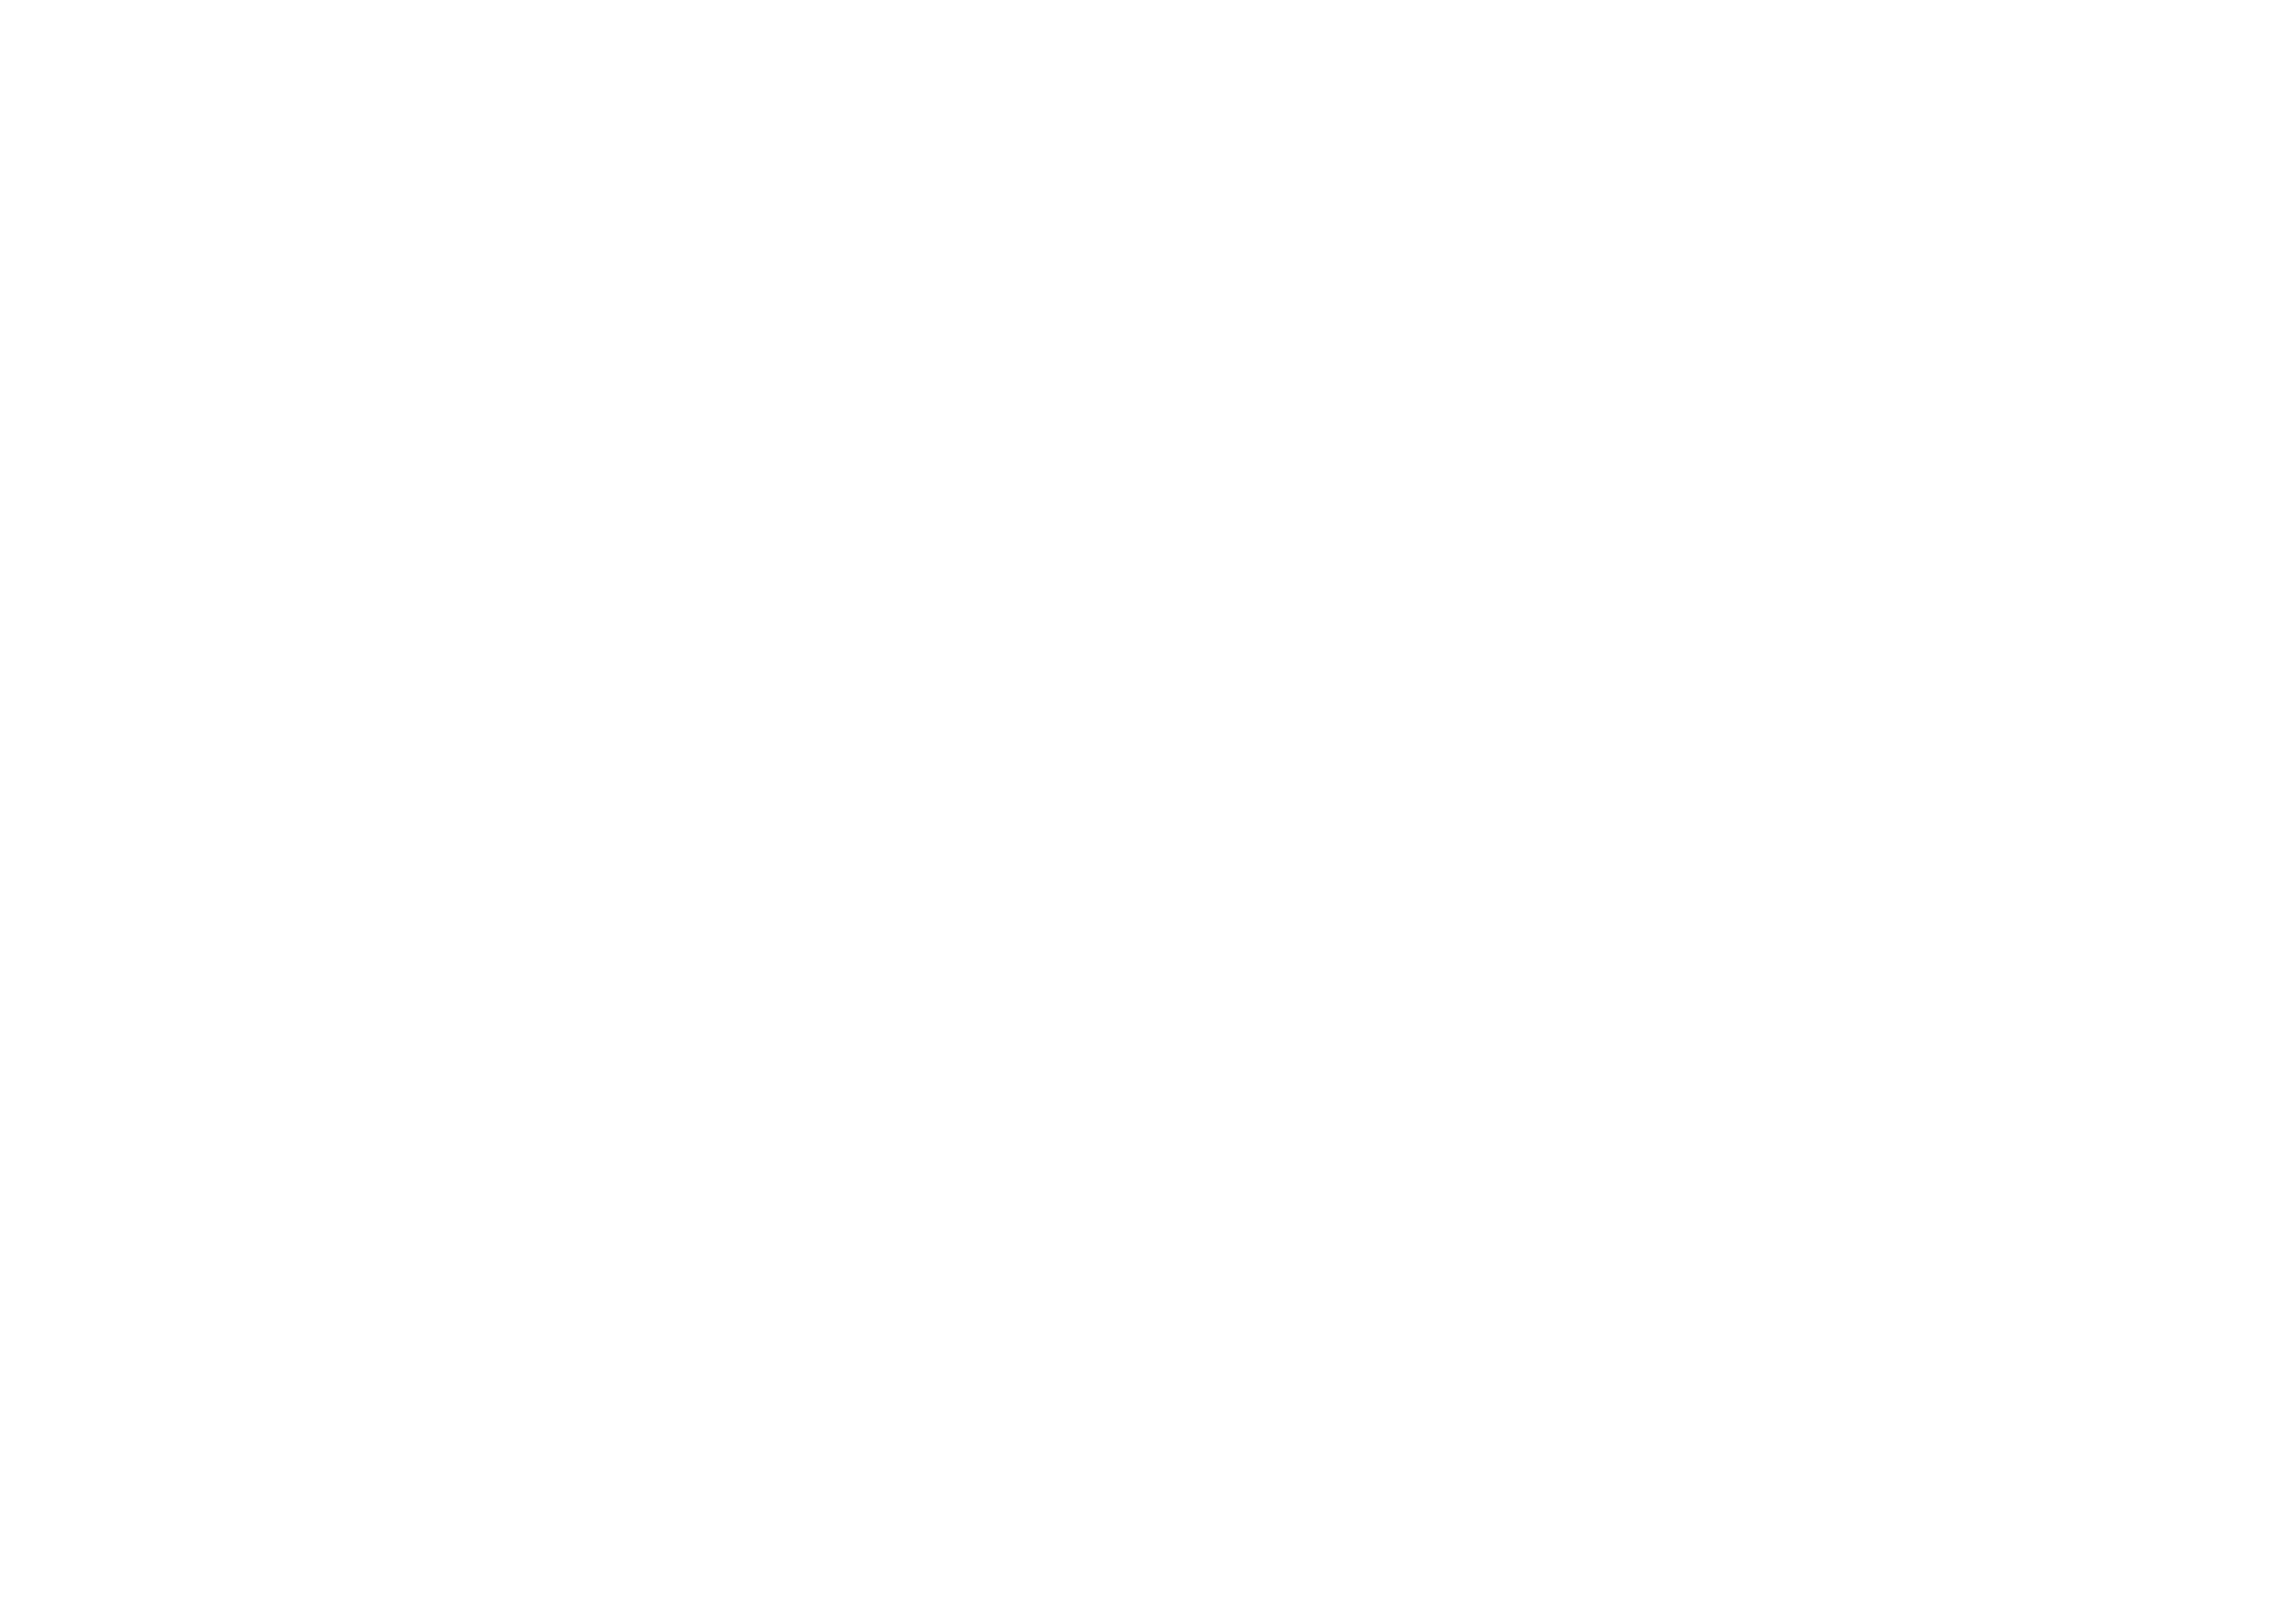 Magellan Business School